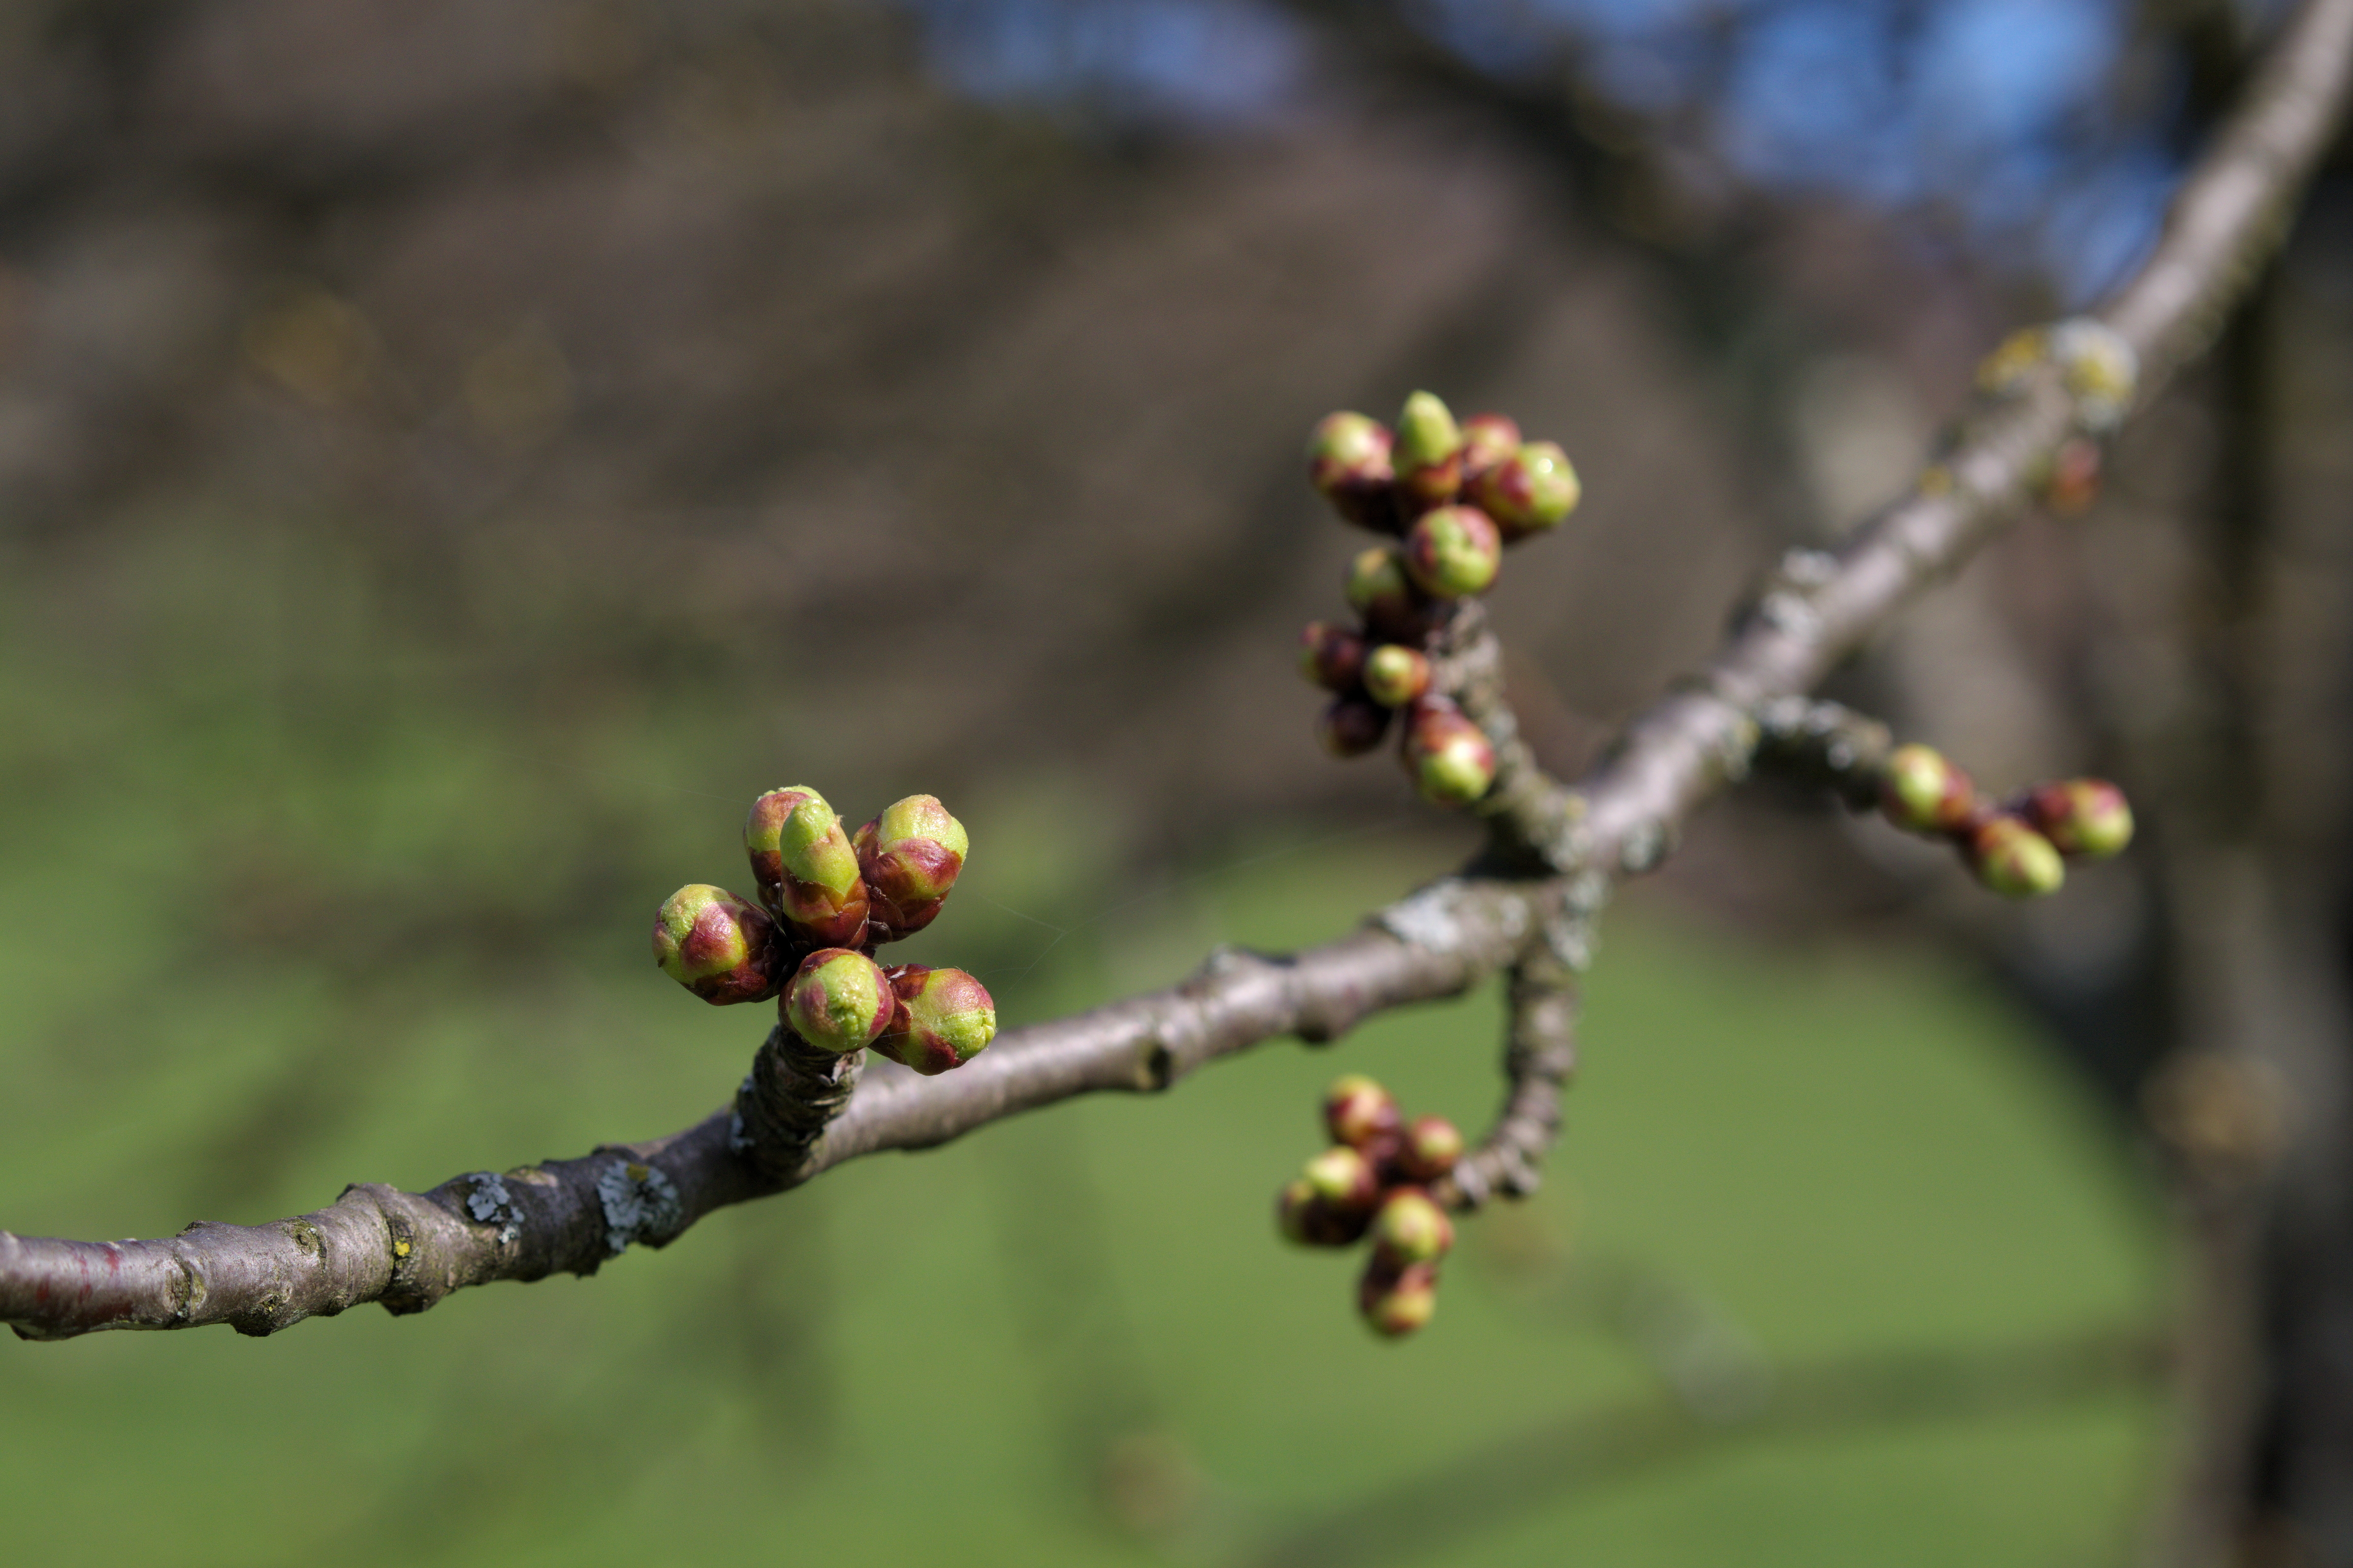 File:Apple-tree-buds.jpg - Wikimedia Commons